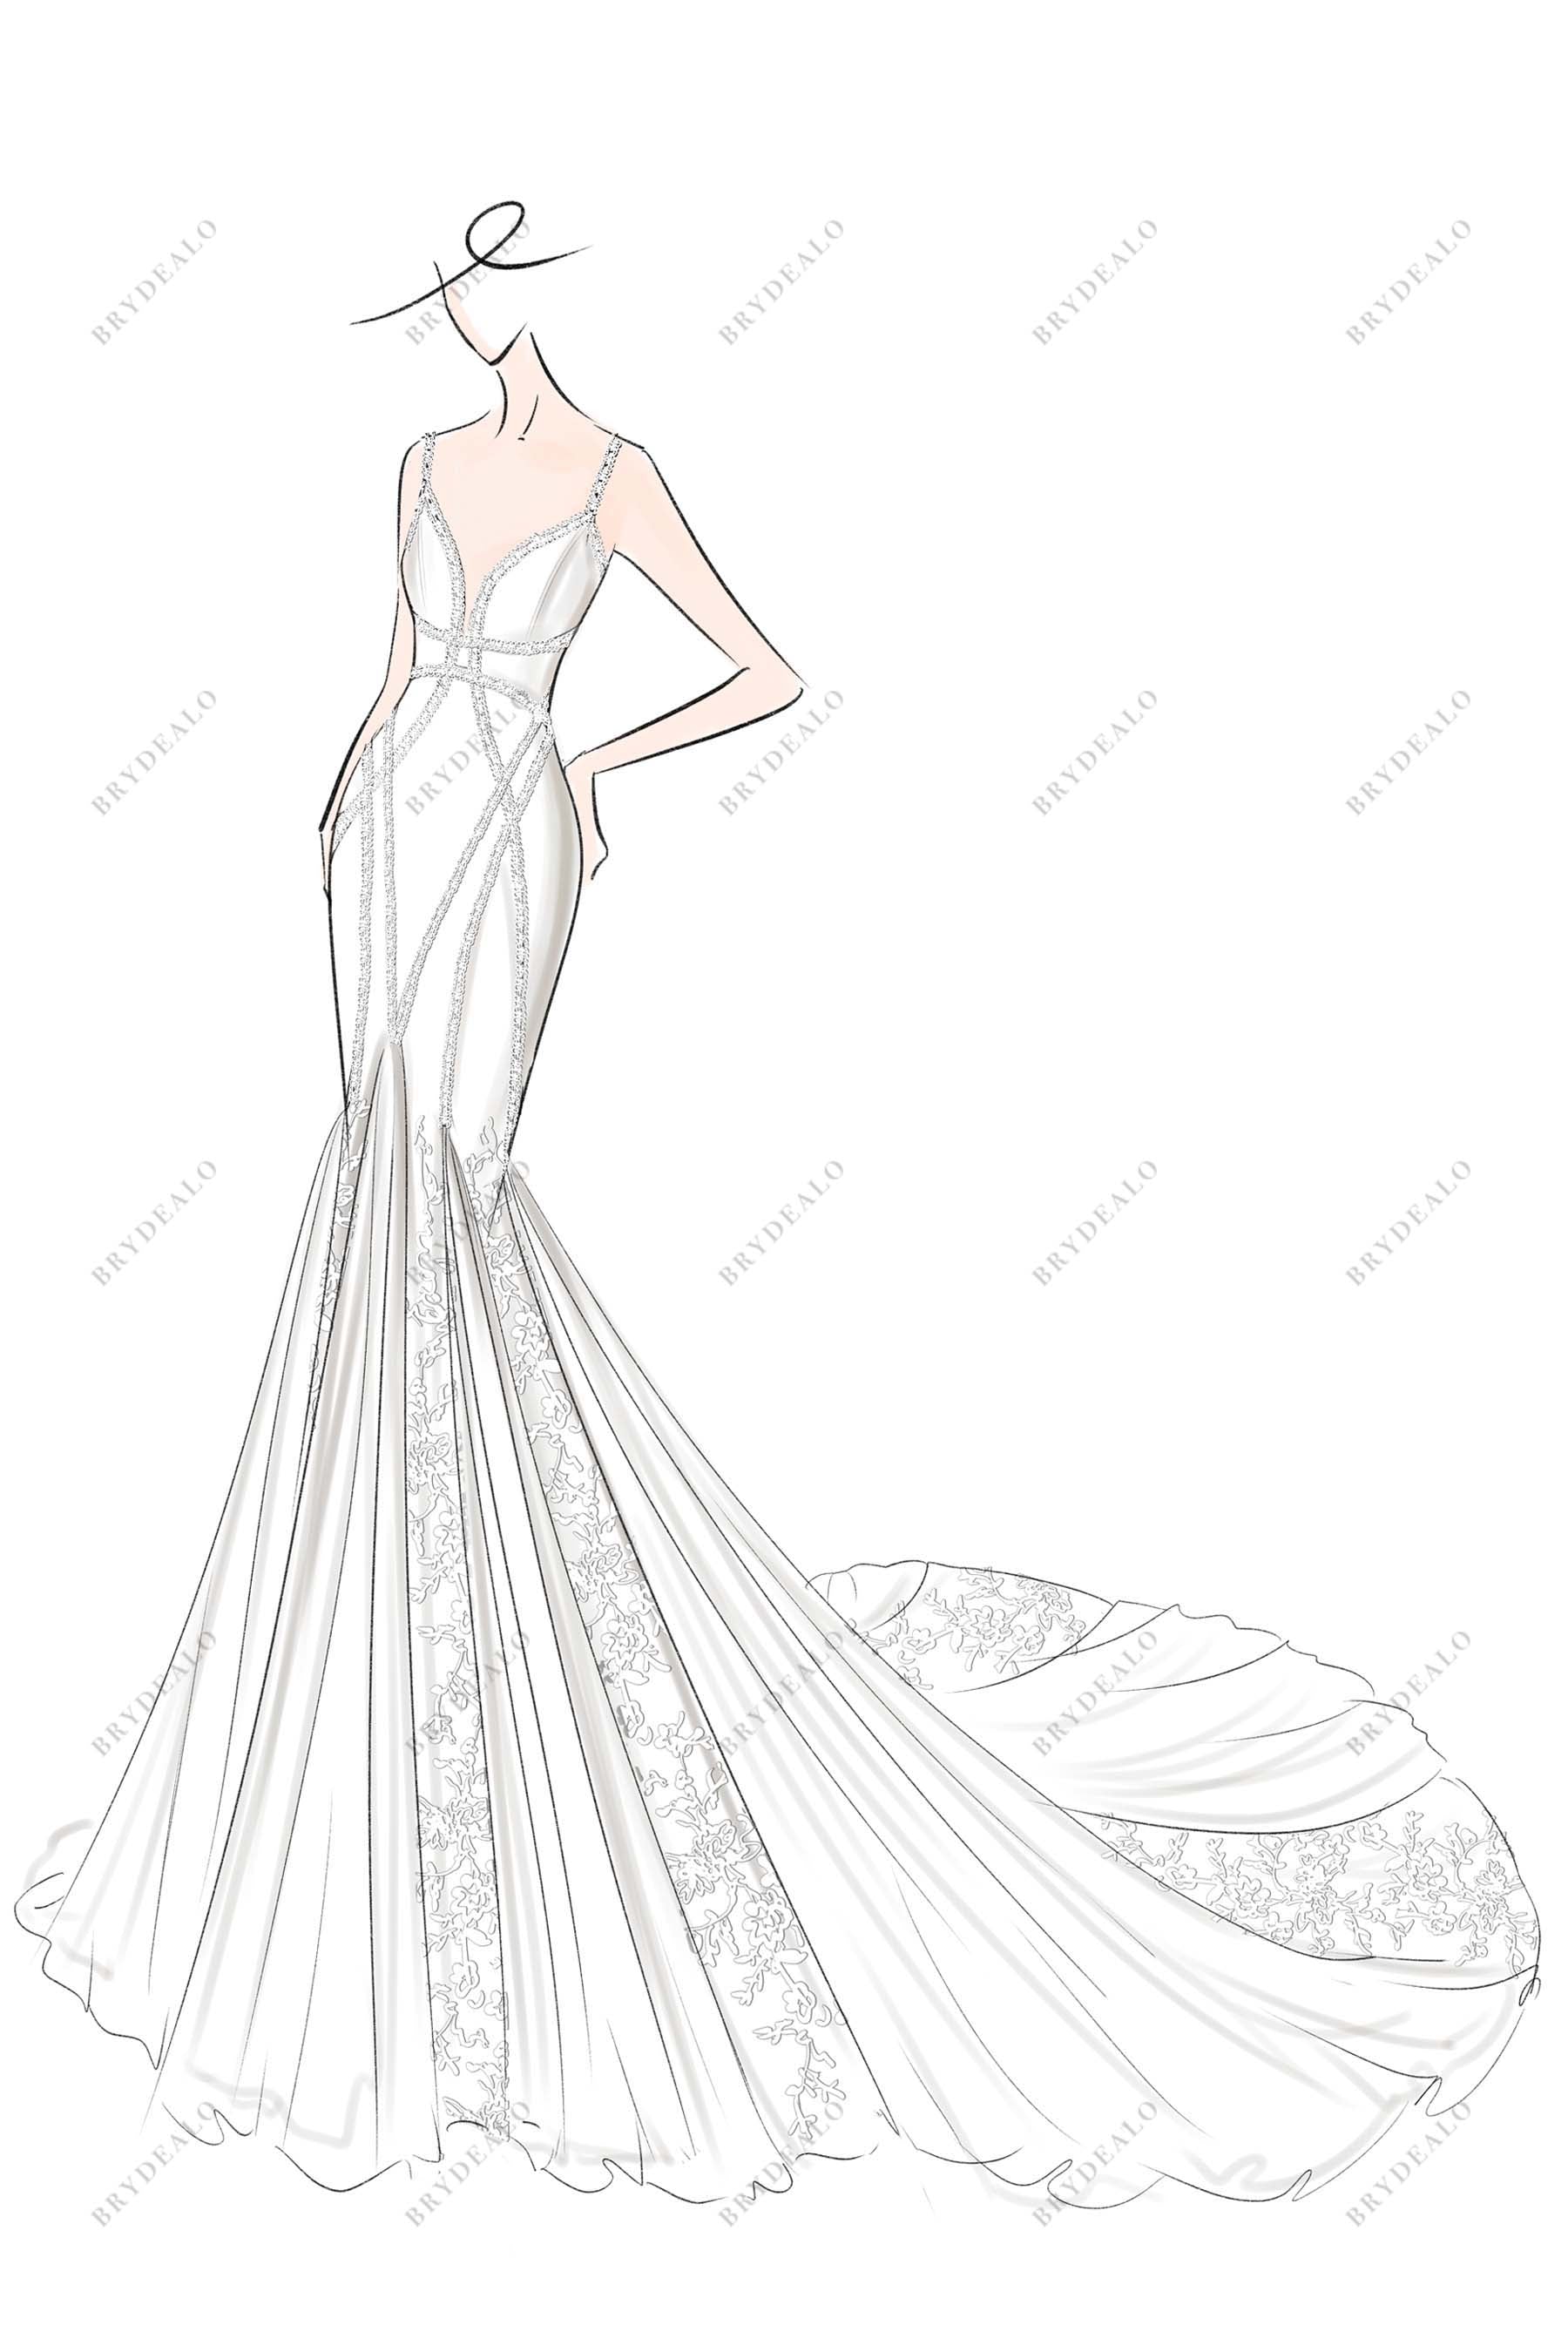 Designer Lace Straps Chiffon Godet Mermaid Wedding Dress Sketch